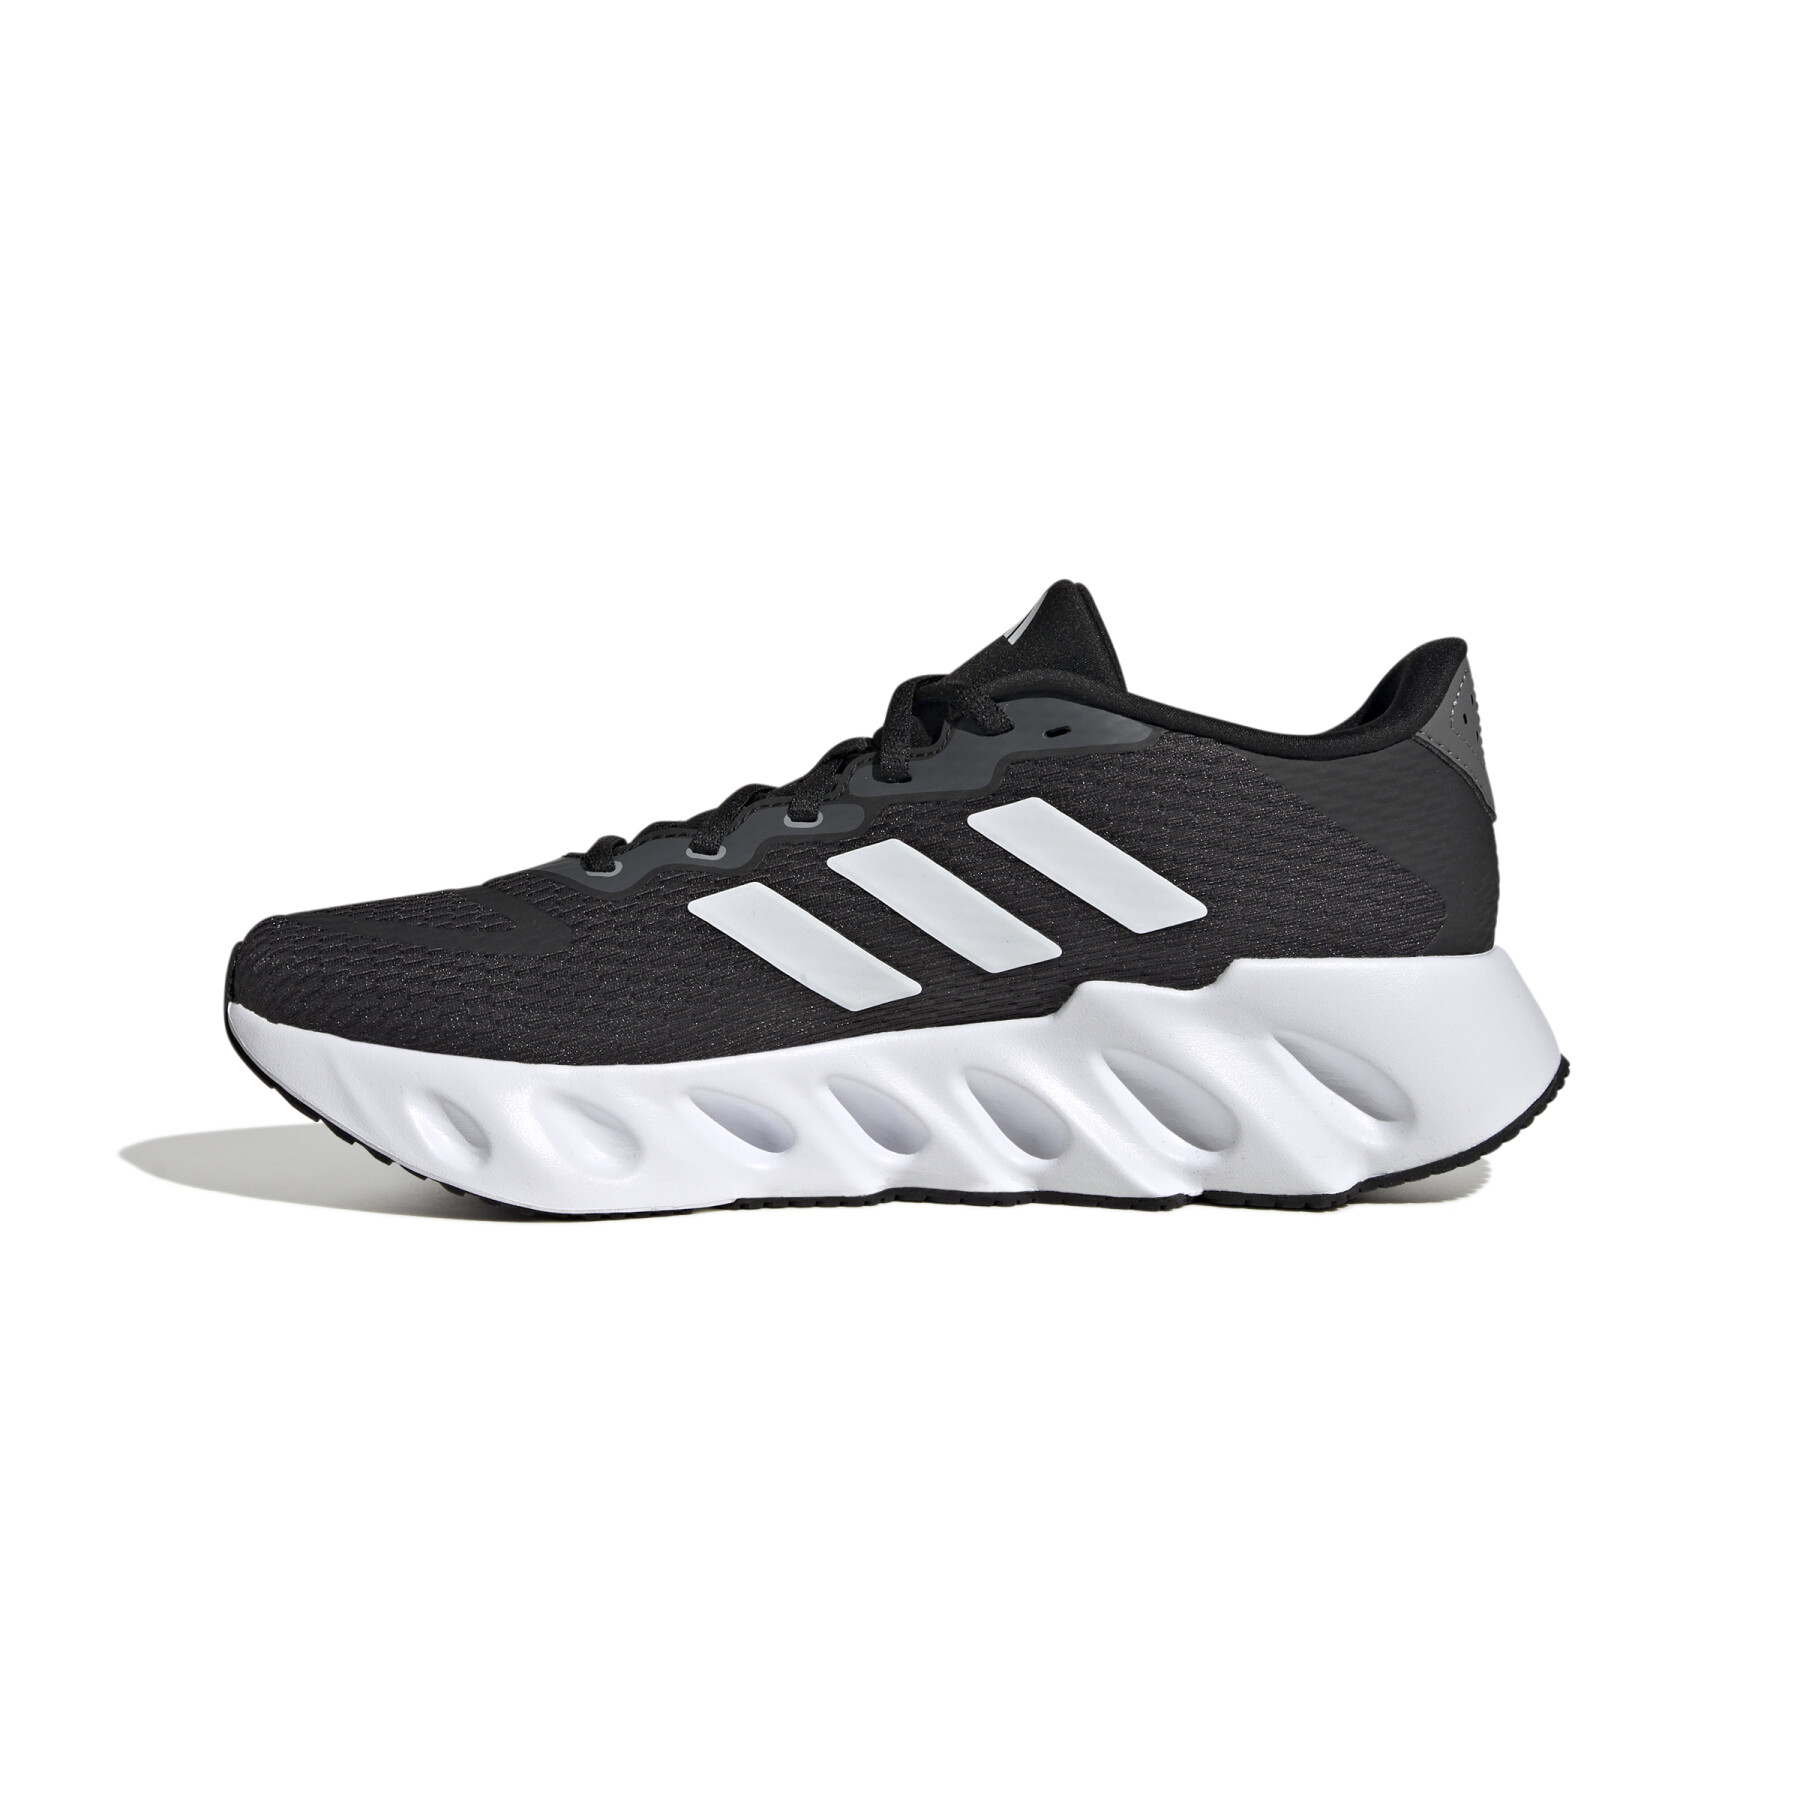 Running shoes adidas Switch Run